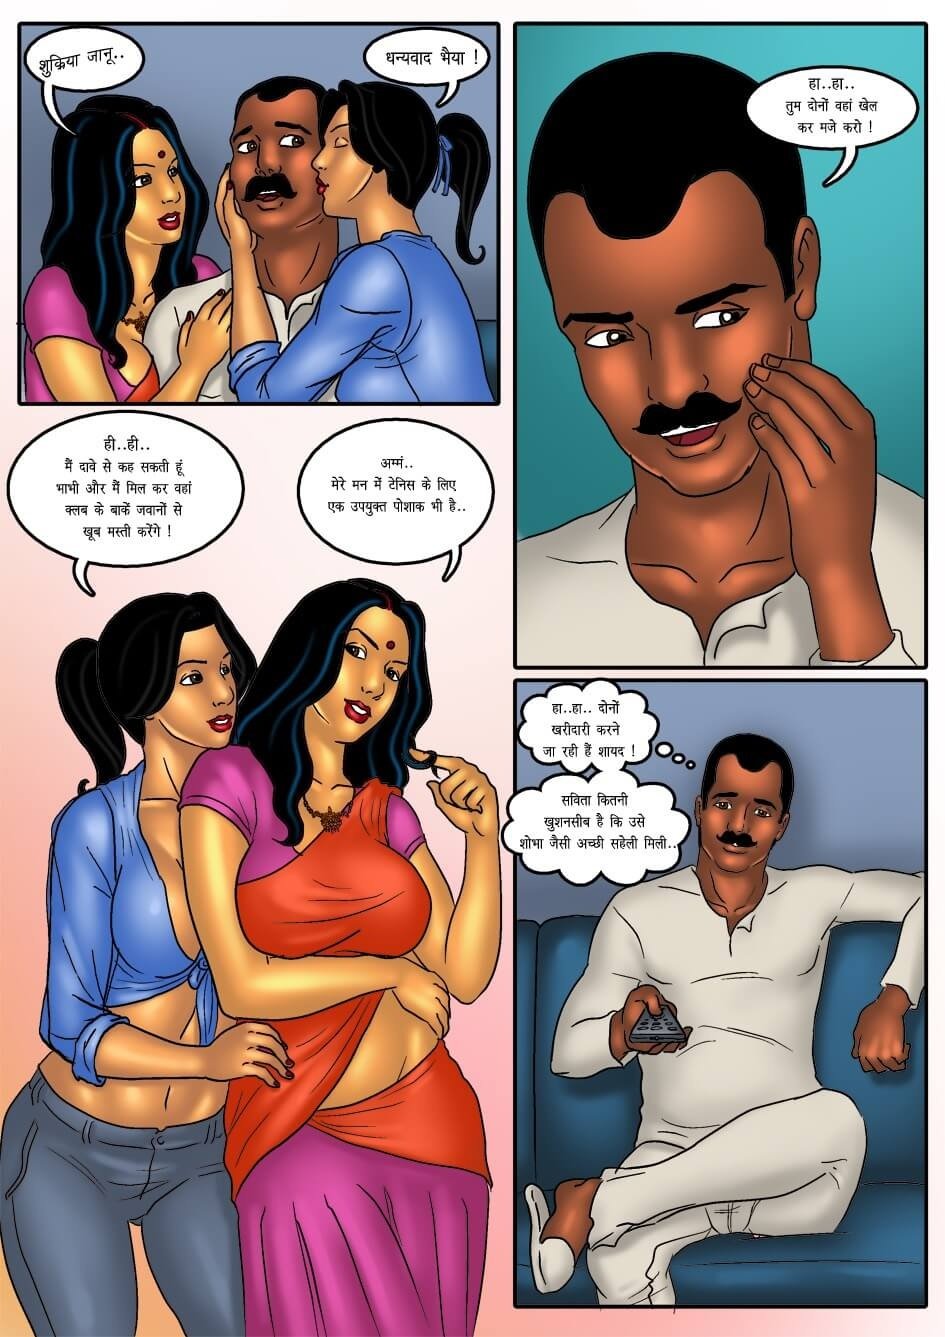 Savita Bhabhi Hindi Porn Comics by Kirtu (Porn Comic) Rule 34 Comics pic pic